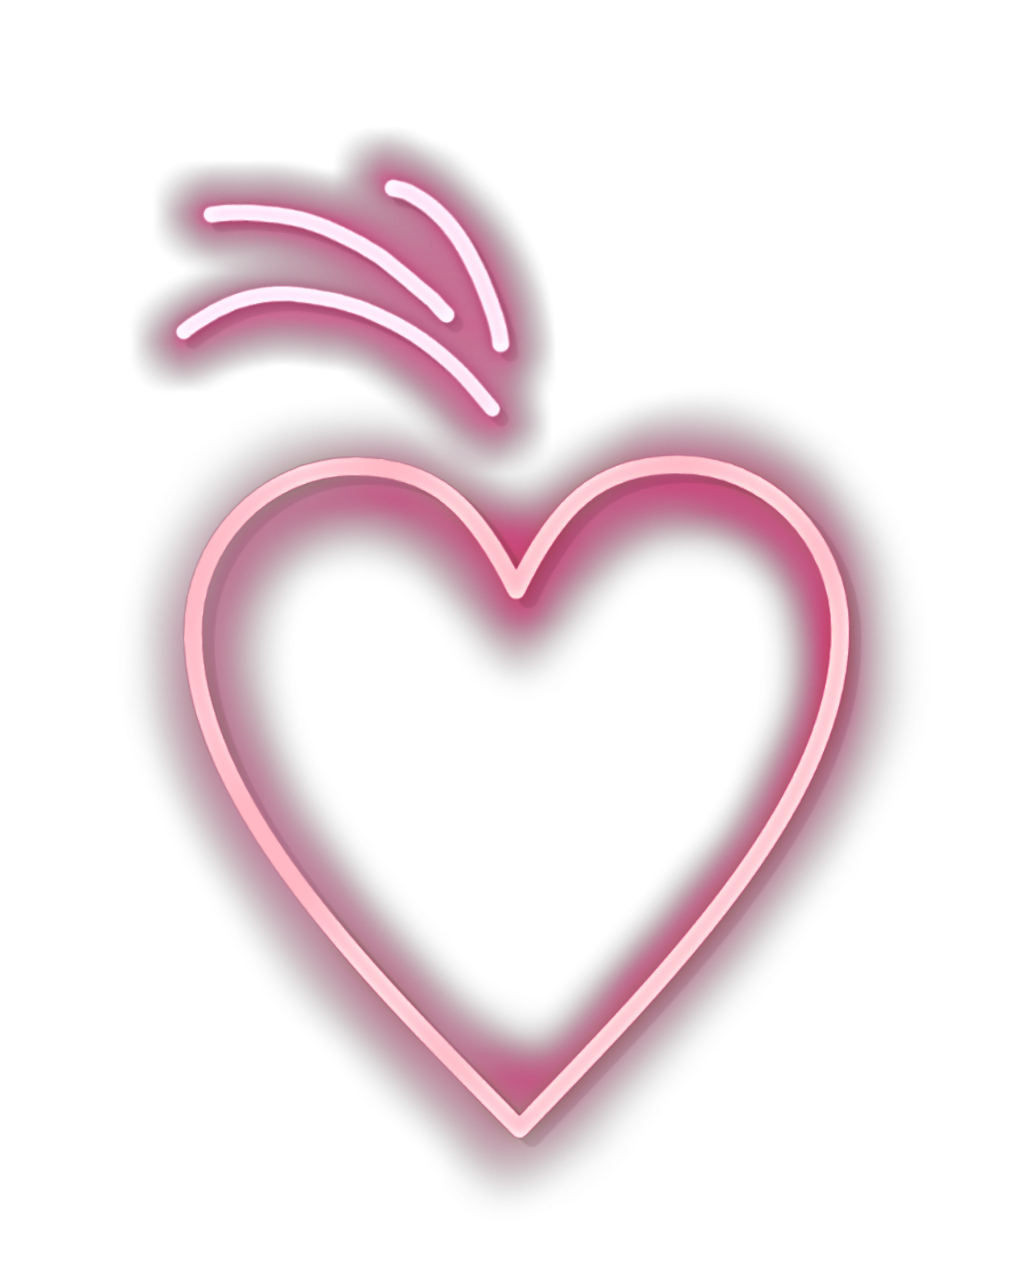 #madewithpicsartdrawingtools #neon #heart #pink #freetoedit